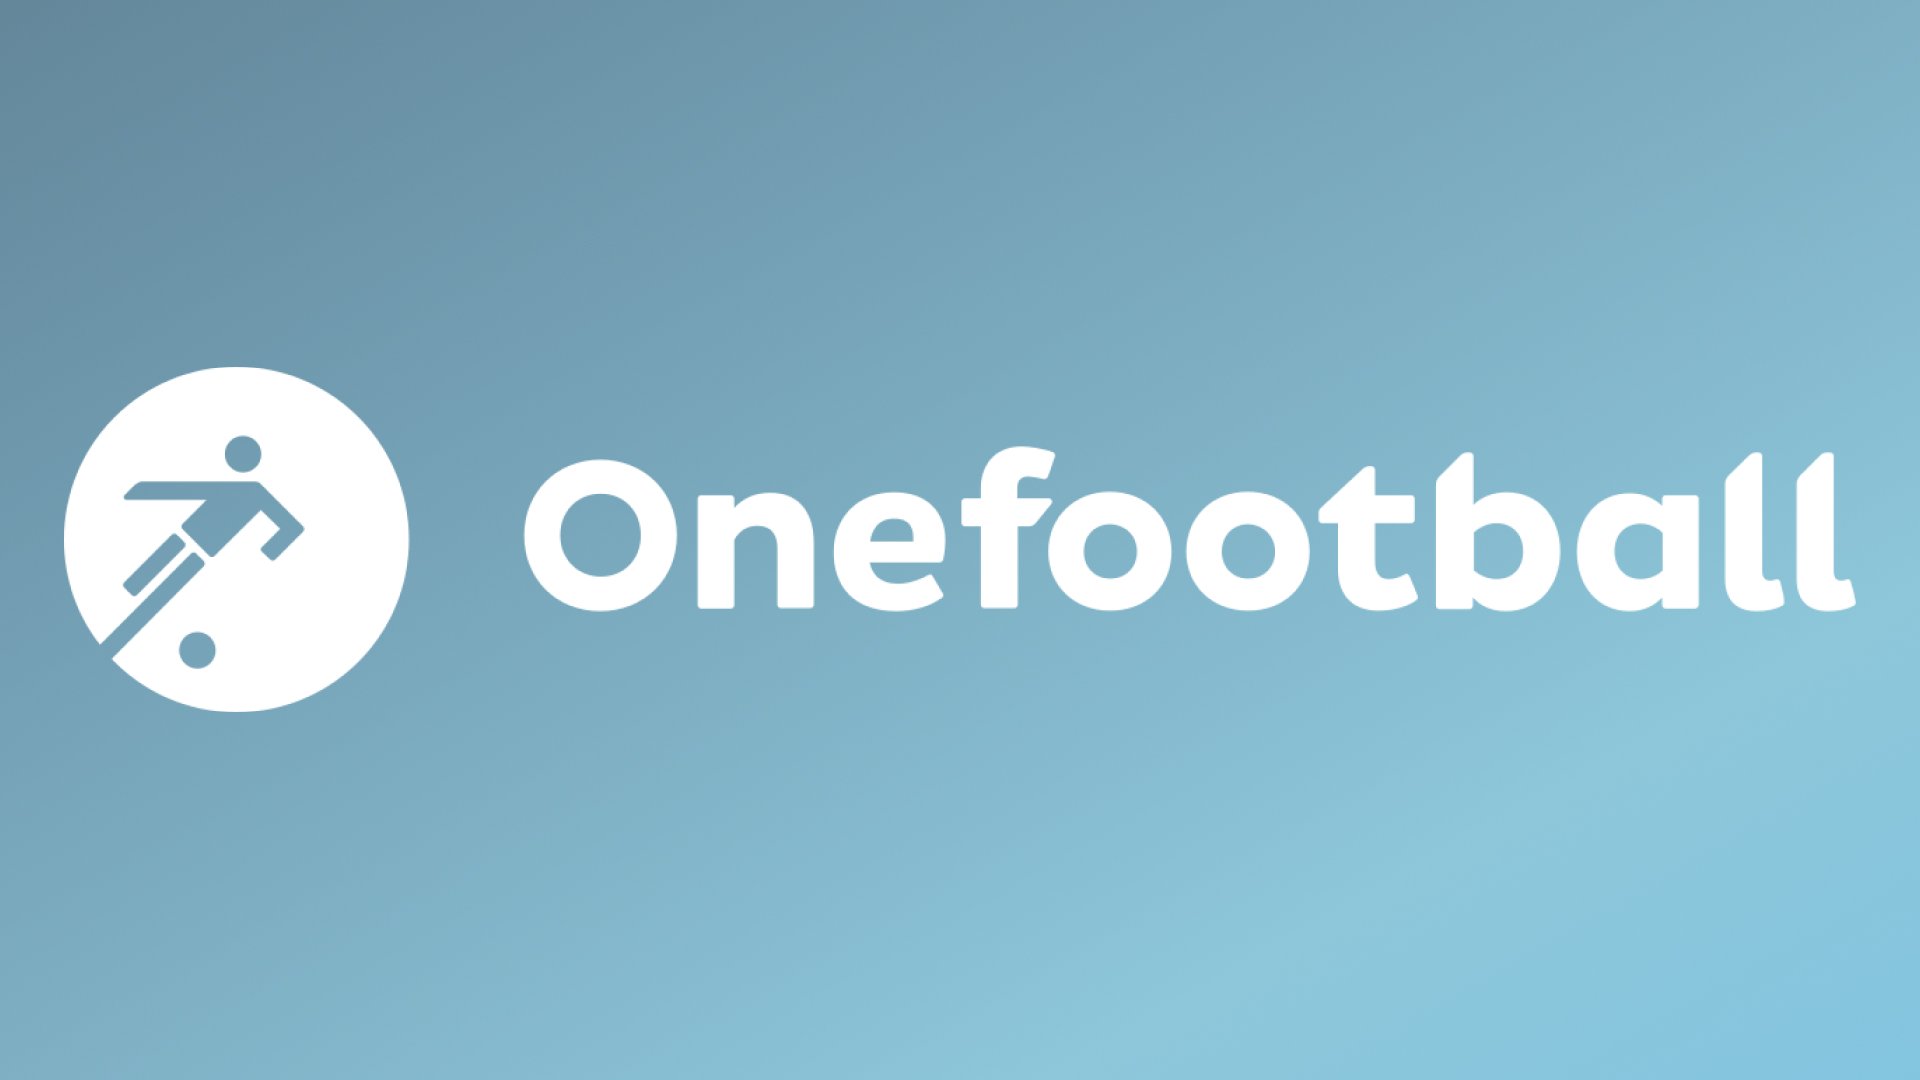 OneFootball 300 Milyon Dolarlik Finansman Turunu Tamamladi